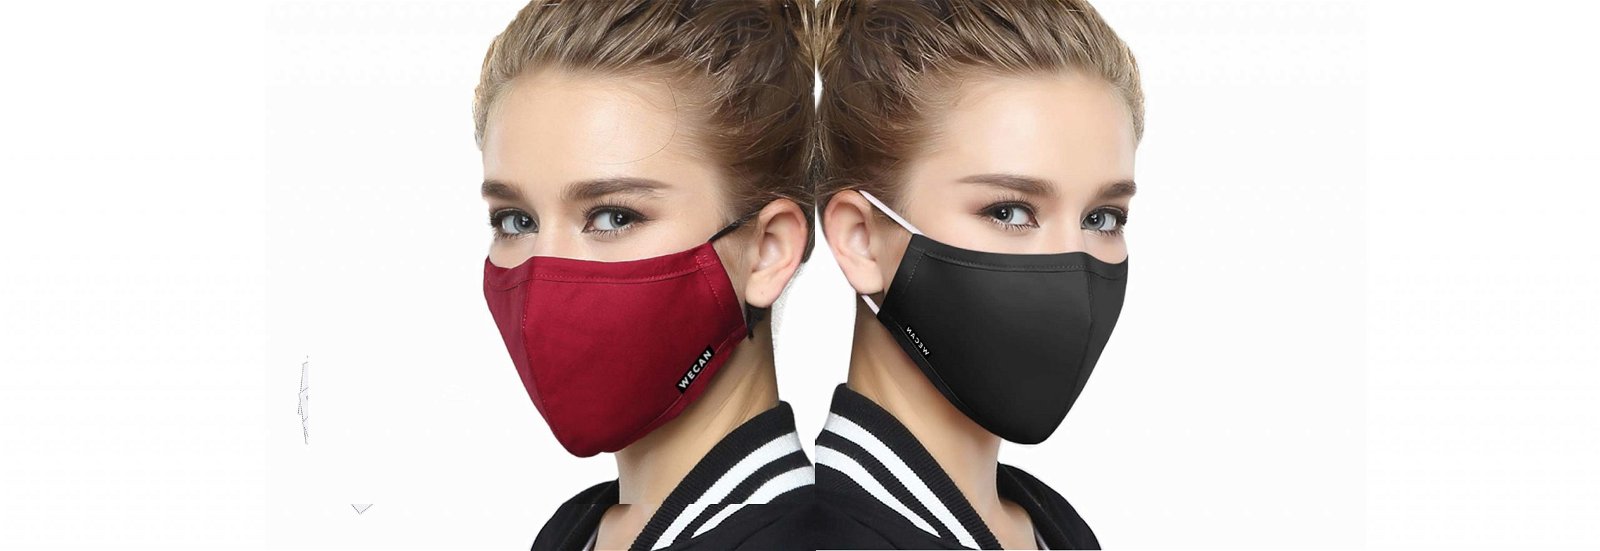 mascherine anti smog indossate 